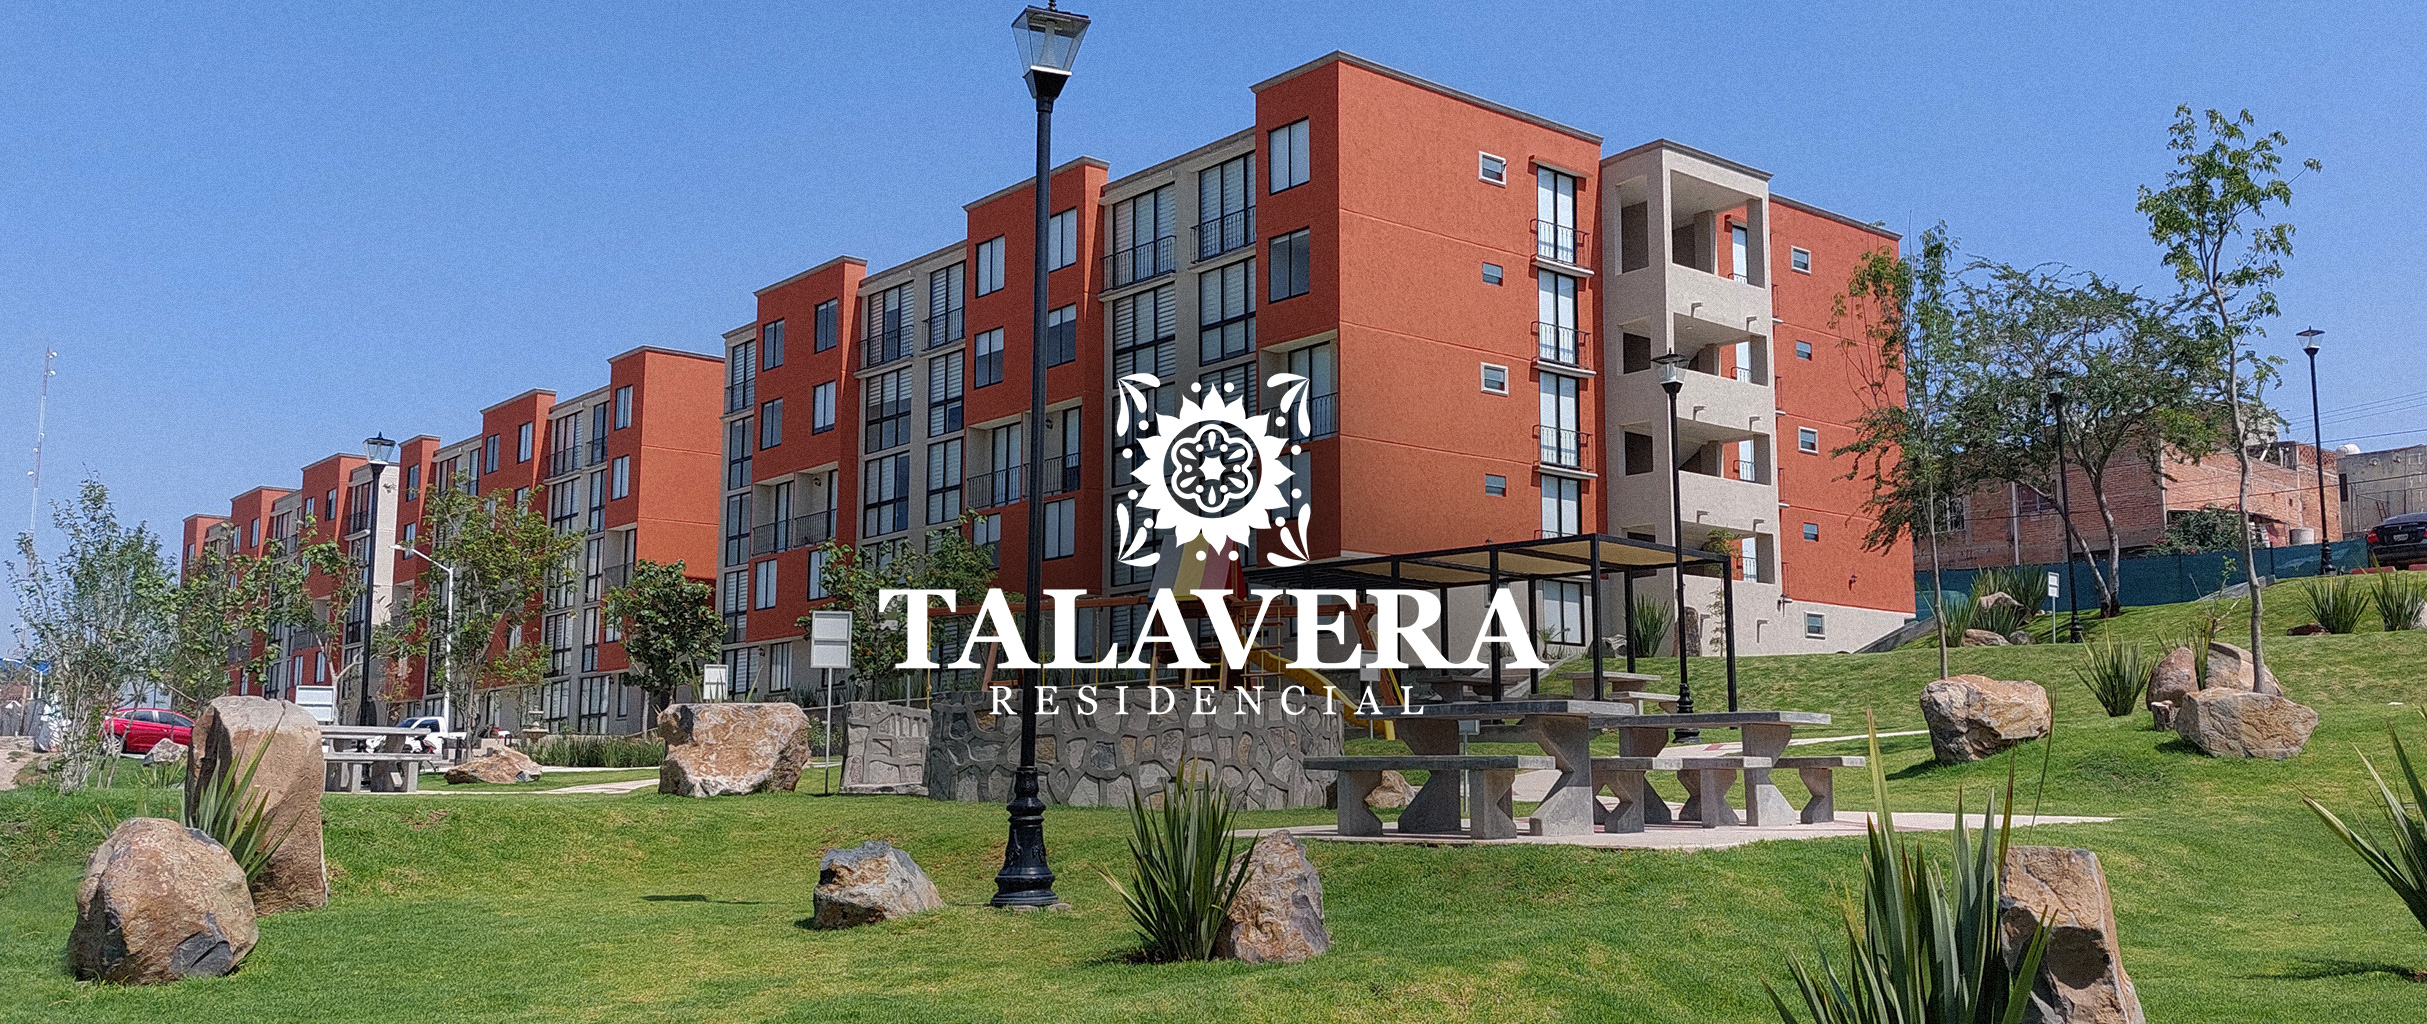 Talavera Residencial